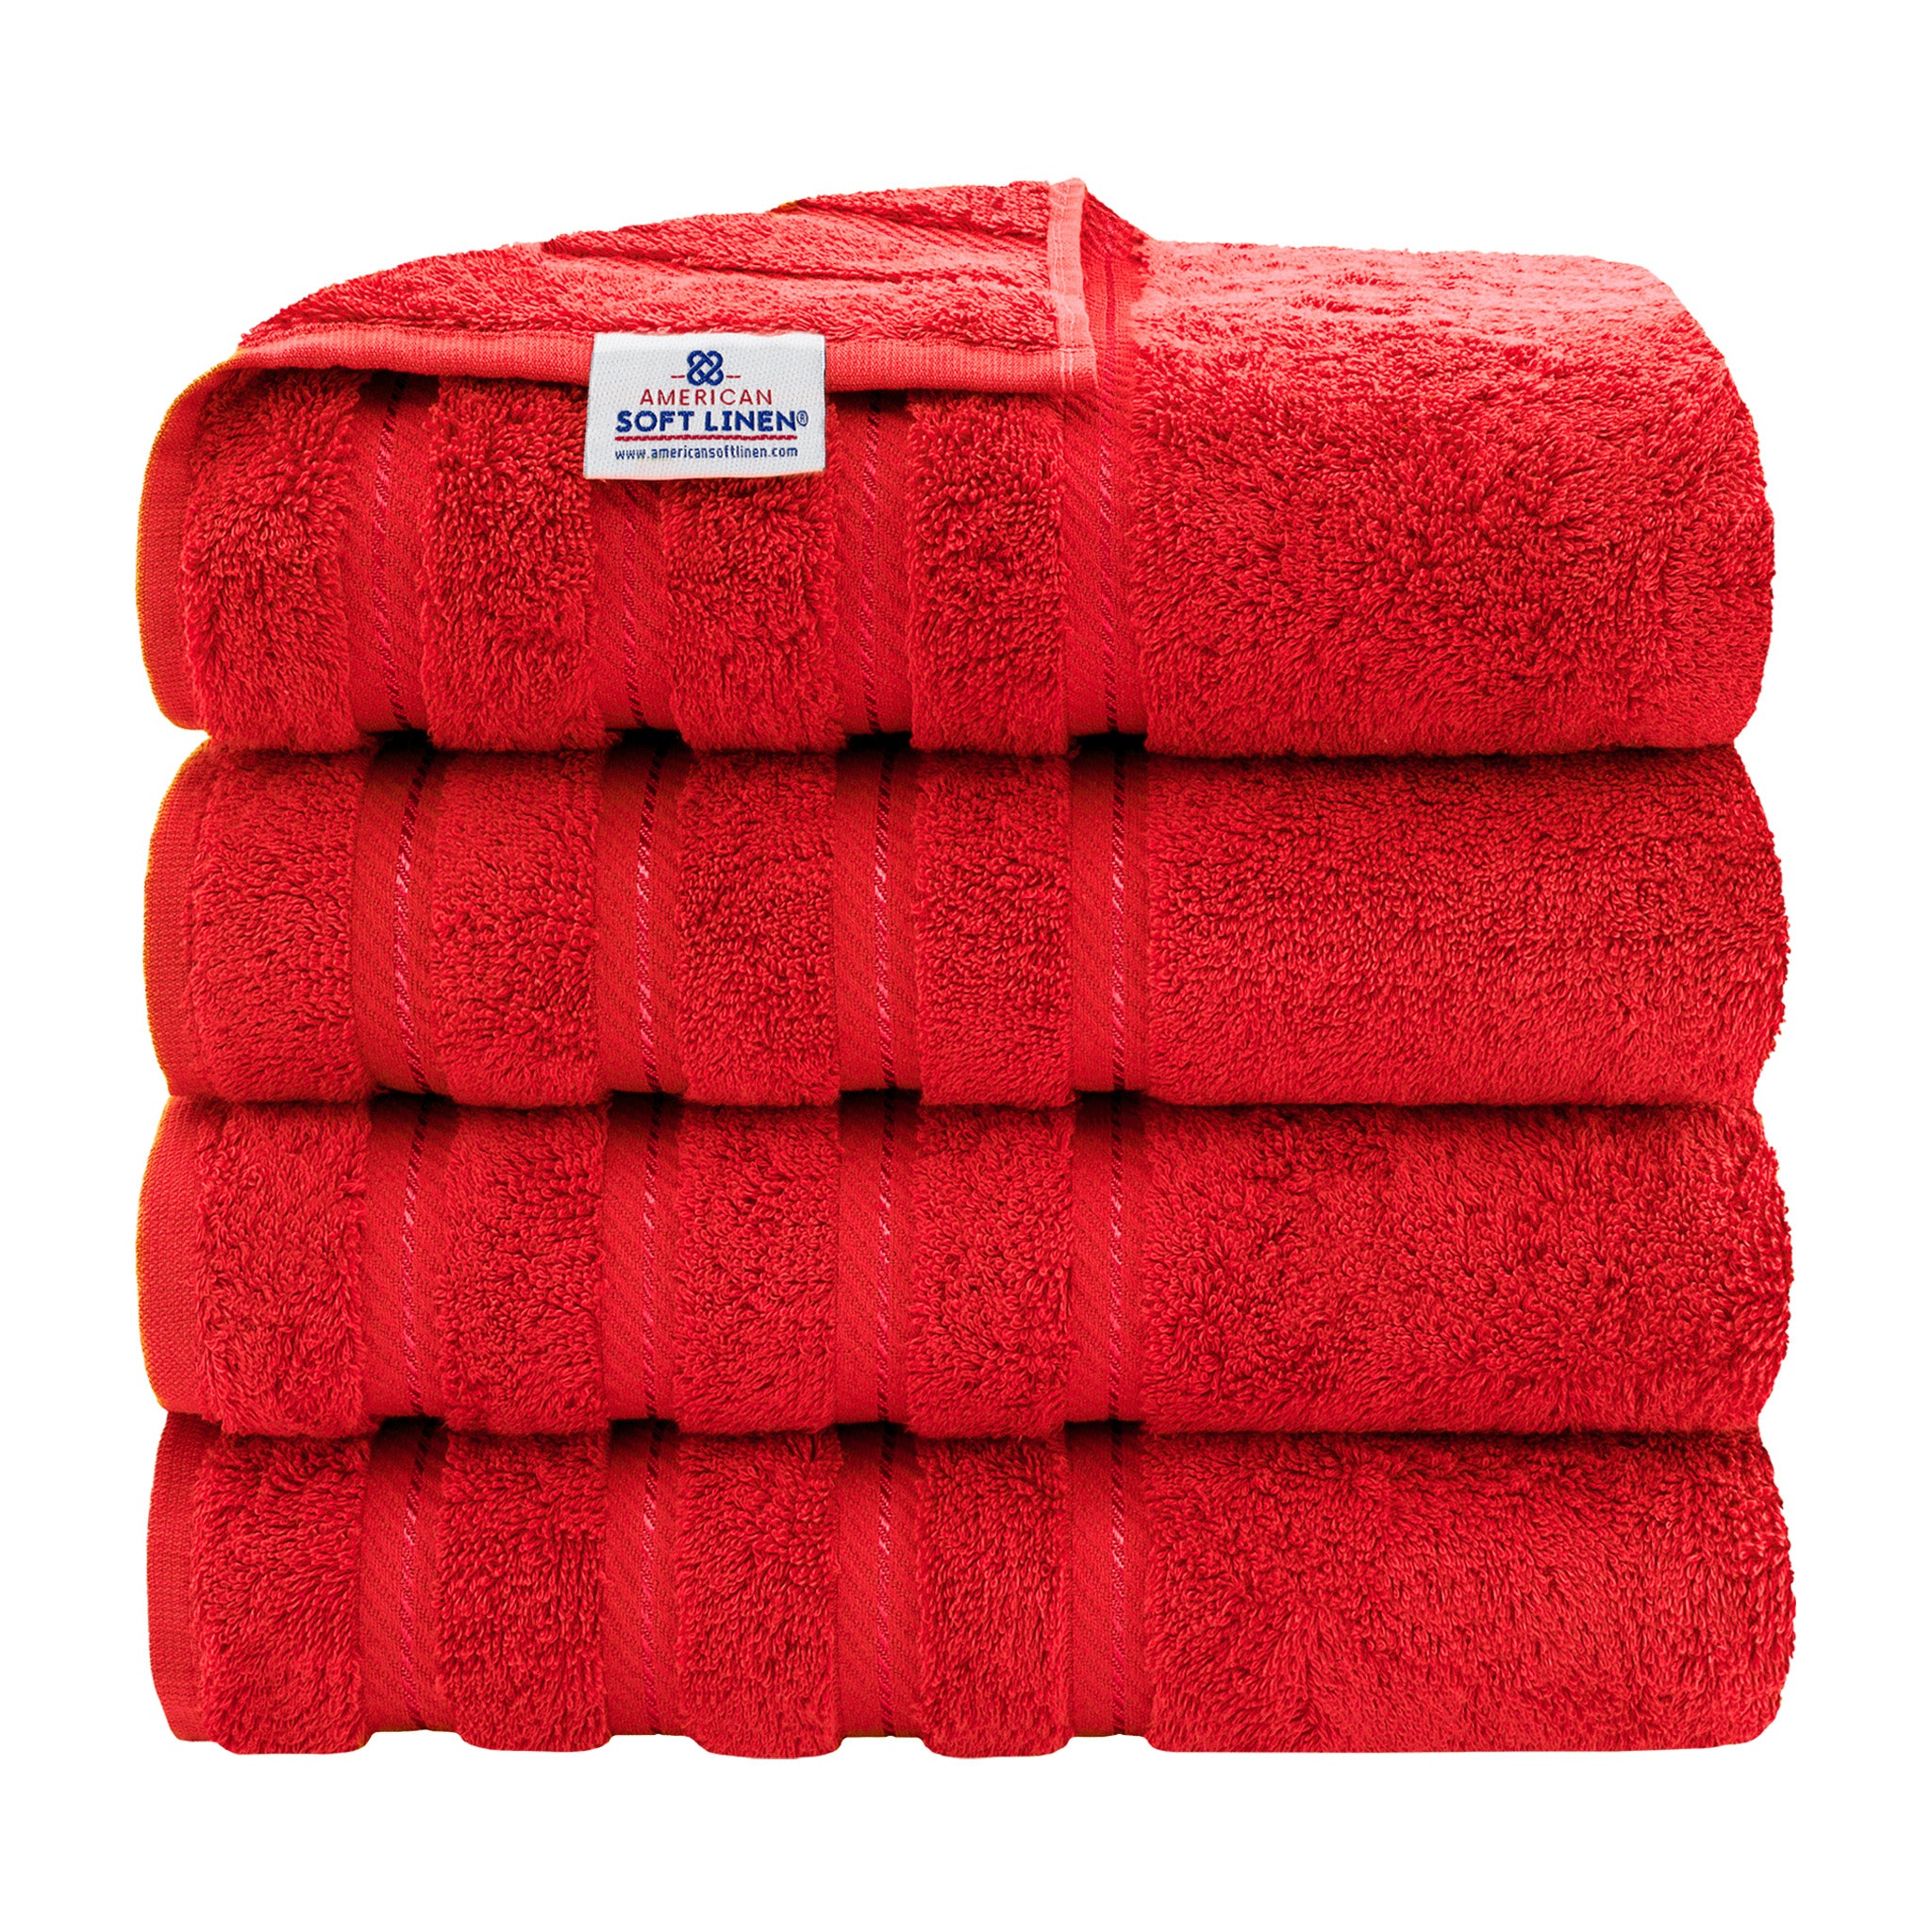 American Soft Linen 100% Turkish Cotton 4 Pack Bath Towel Set Wholesale red-1